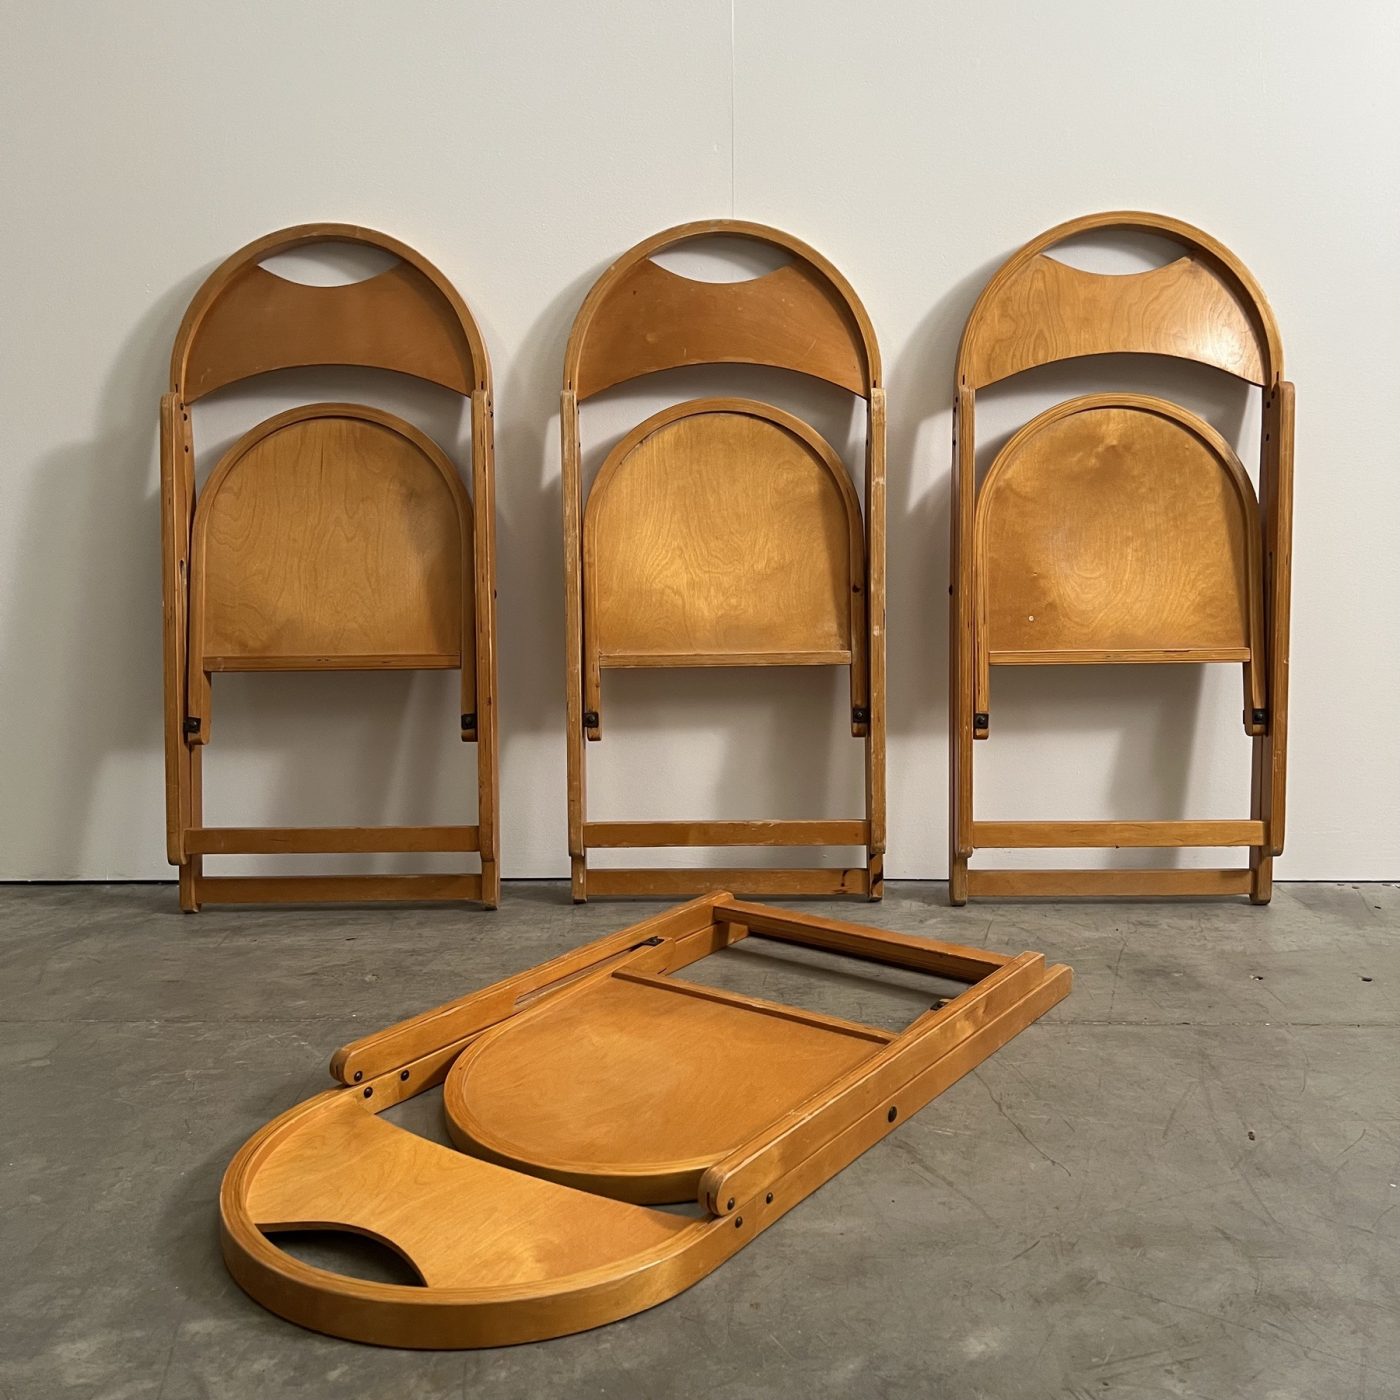 objet-vagabond-folding-chairs0004